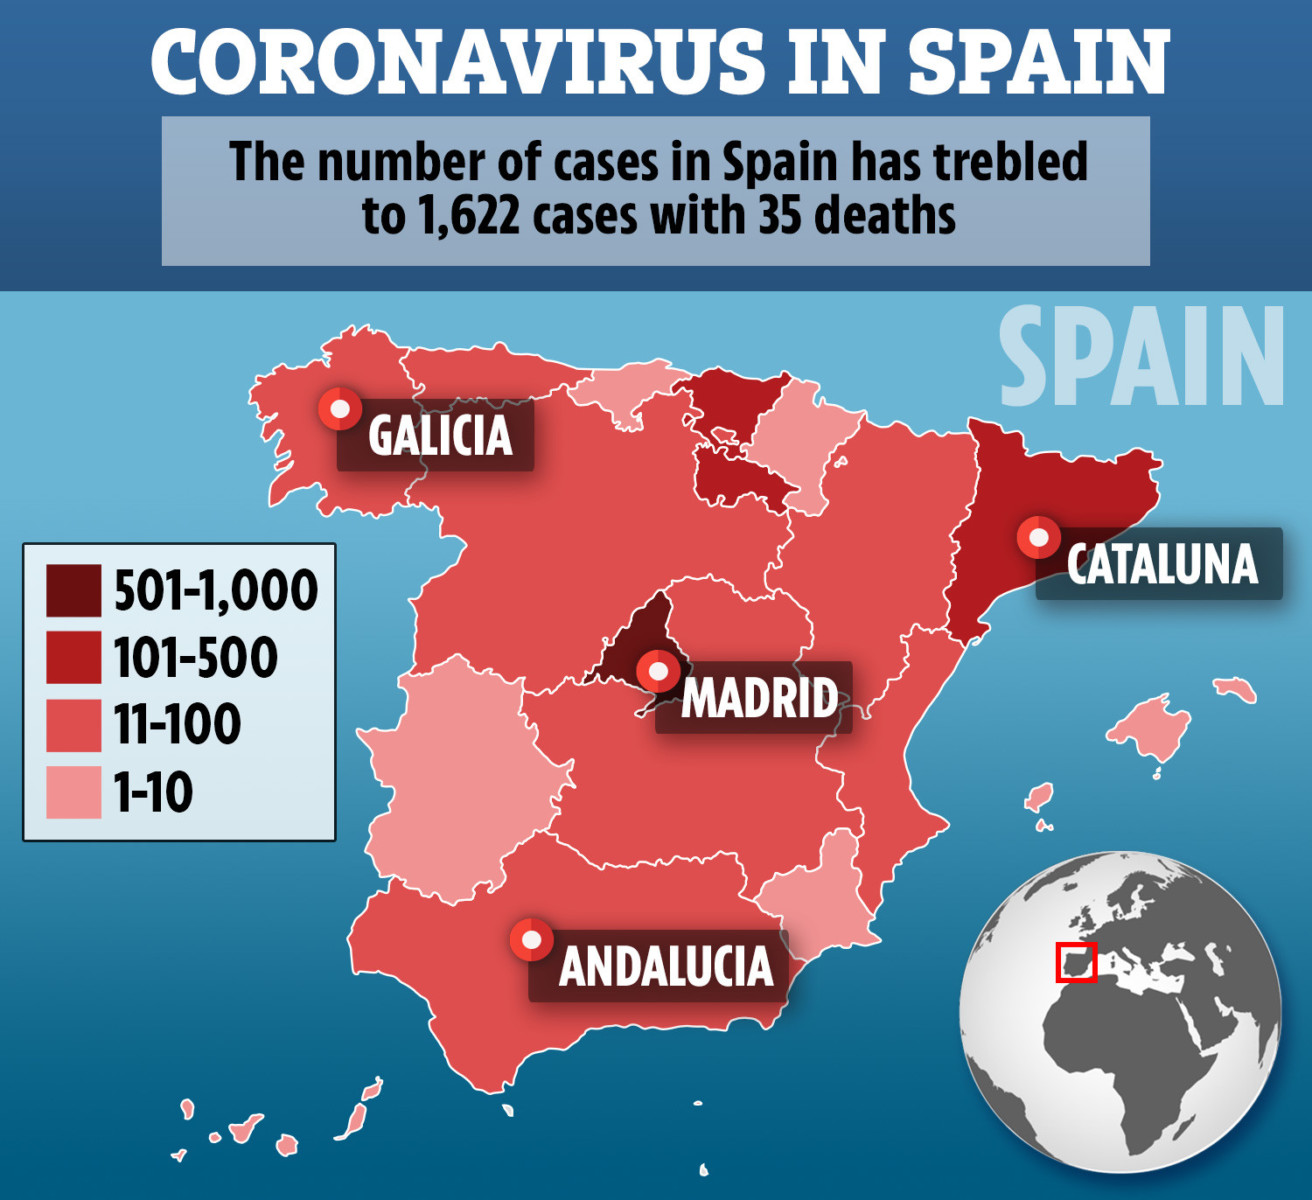  The confirmed cases of coronavirus in Spain